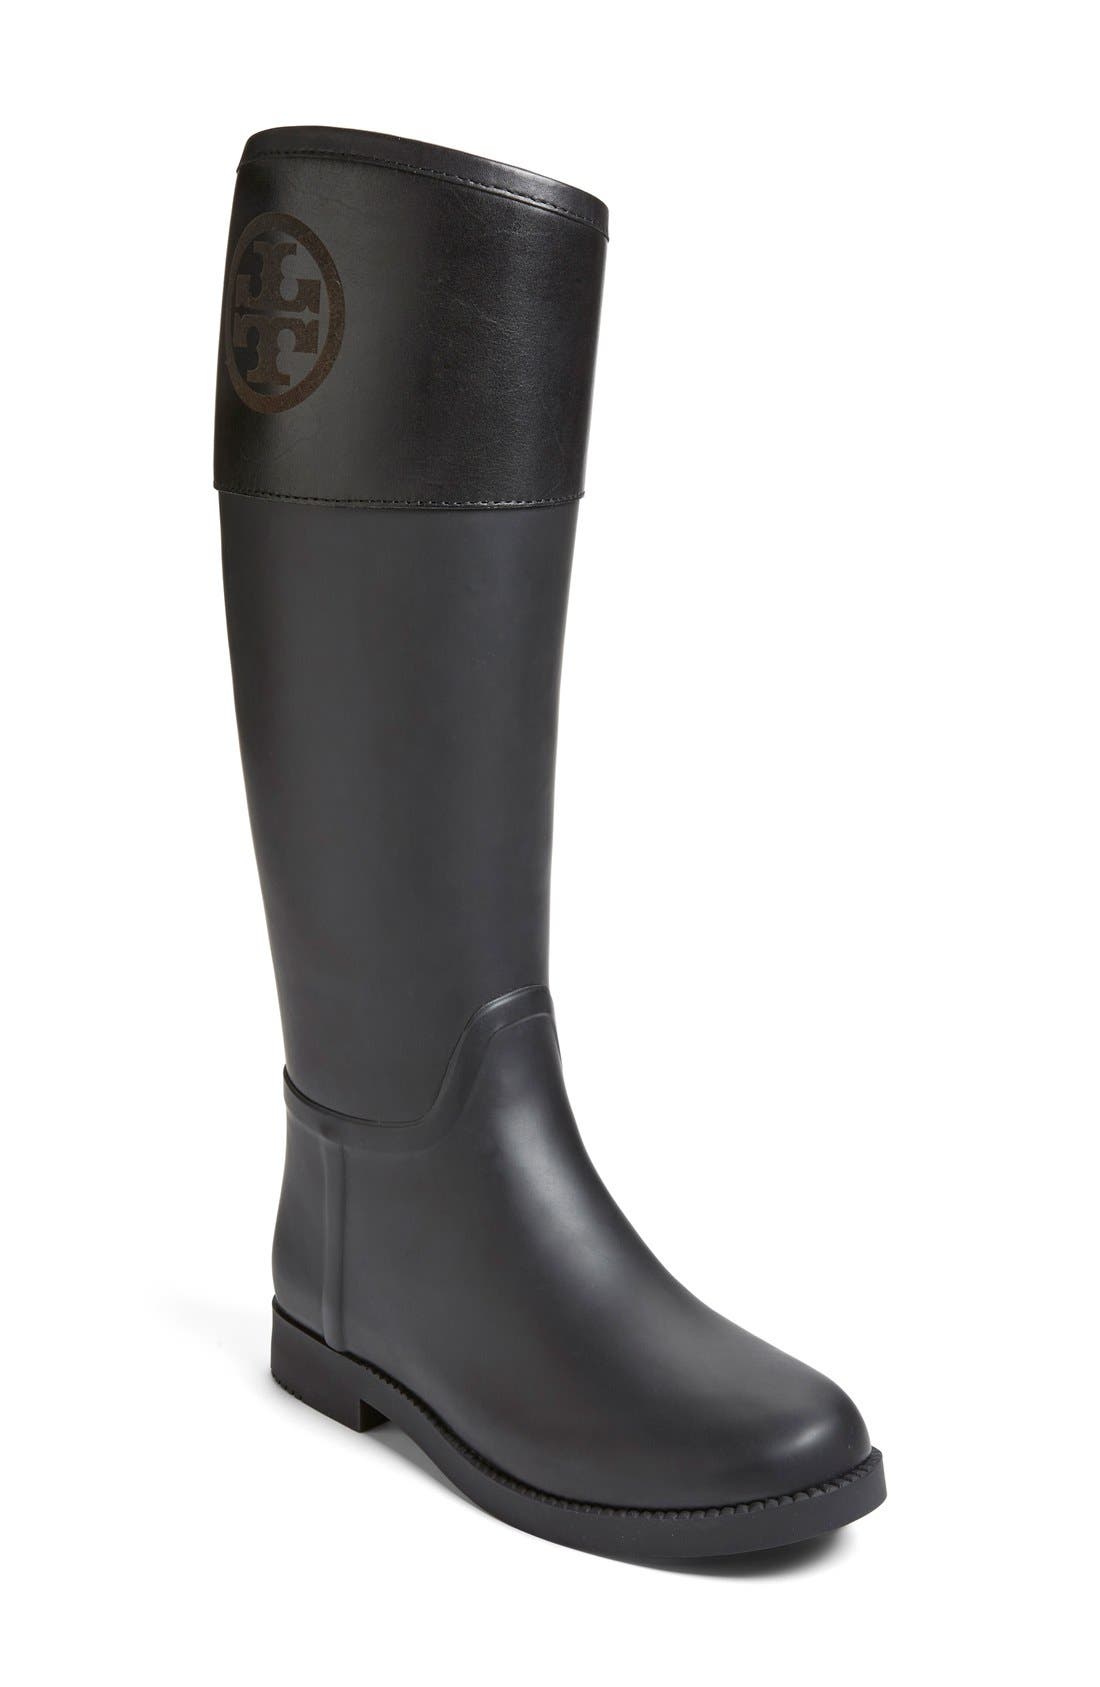 tory burch black rain boots